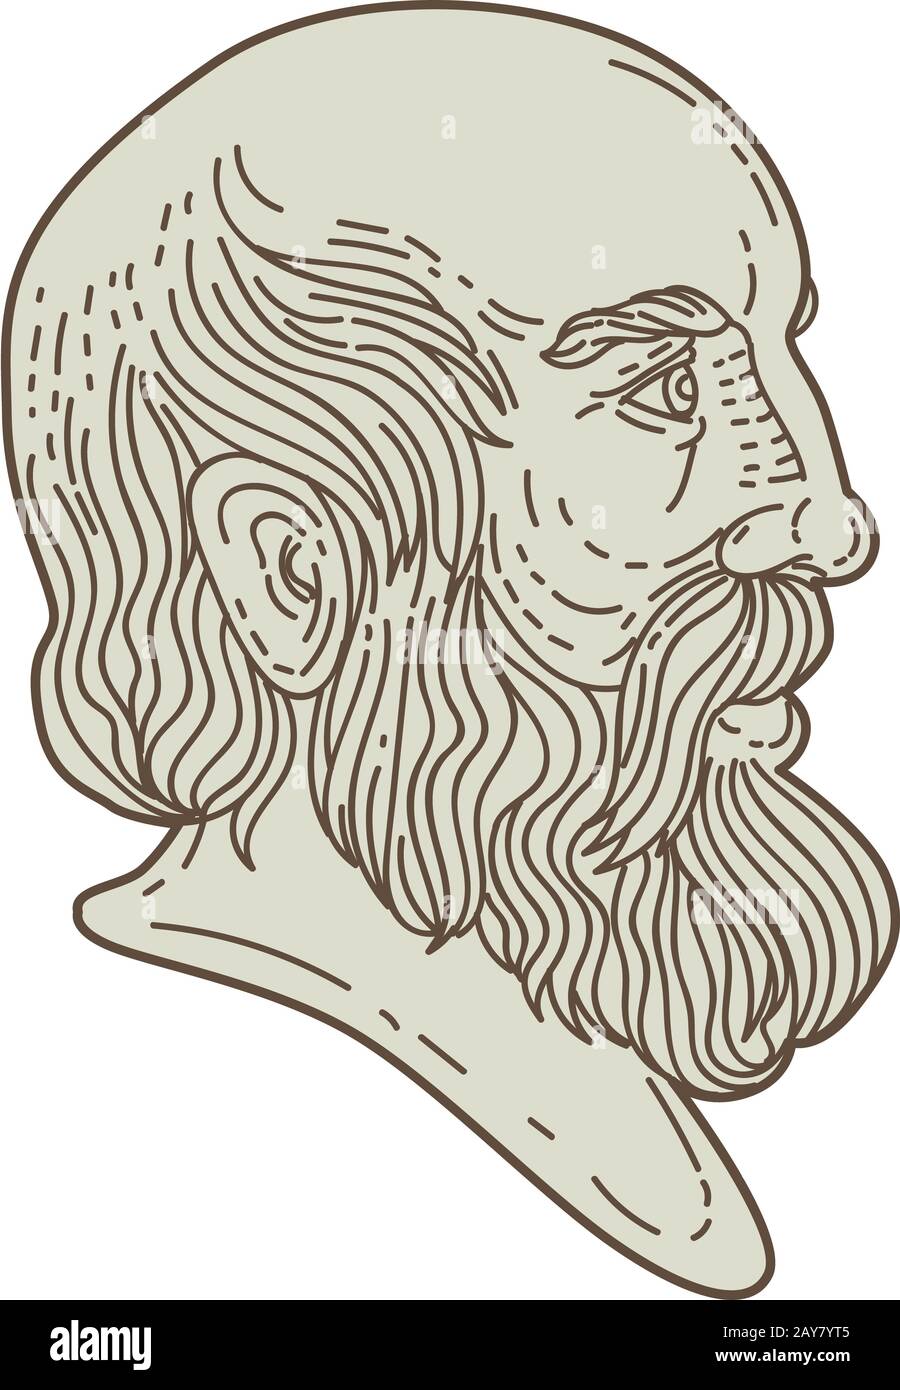 Plato Greek Philosopher Head Mono Line Stock Photo